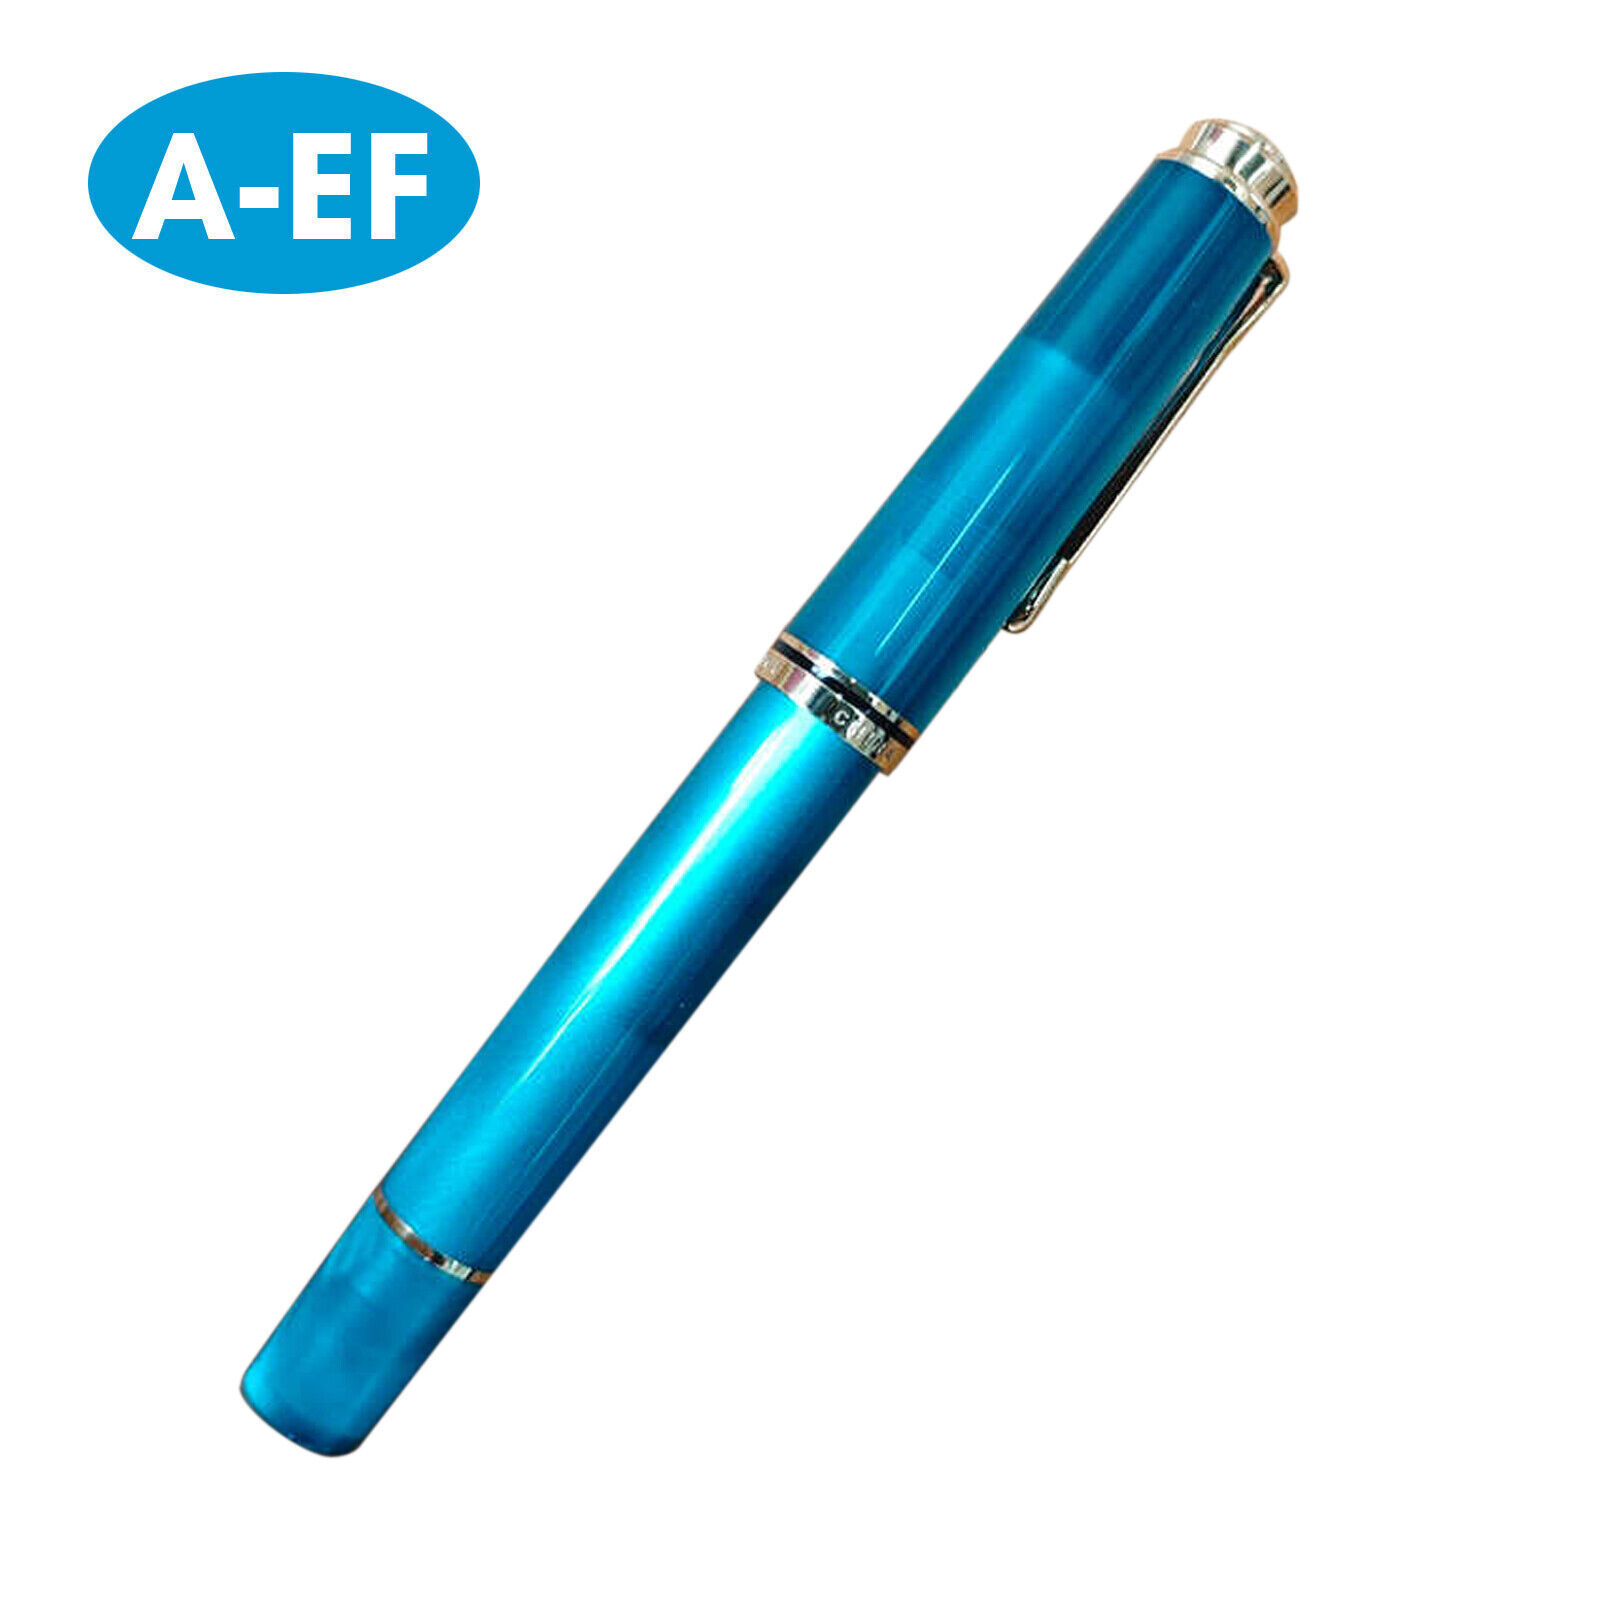 ADMOK 400 Acrylic Piston Fountain Pen Schmidt Soft Smooth #5 Nib EF/F/M NibM6Tnj